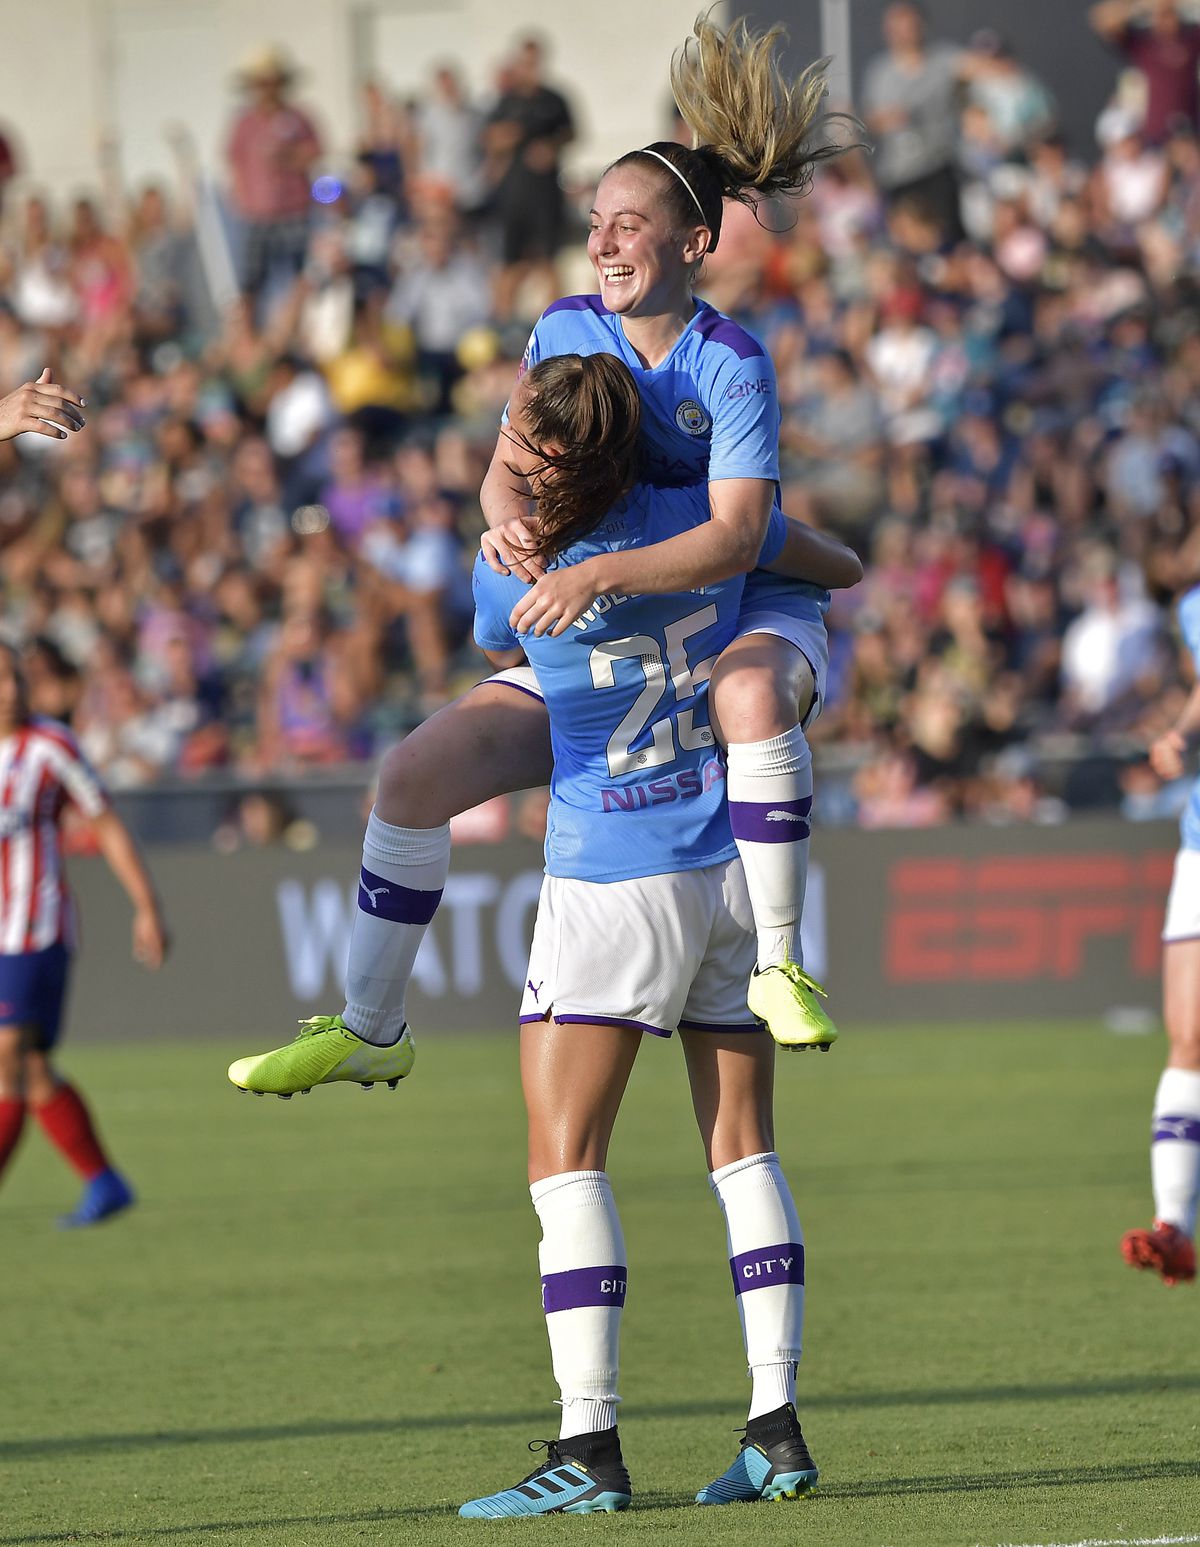 Atletico de Madrid Femenino v Manchester City Women - 2019 Women’s International Champions Cup